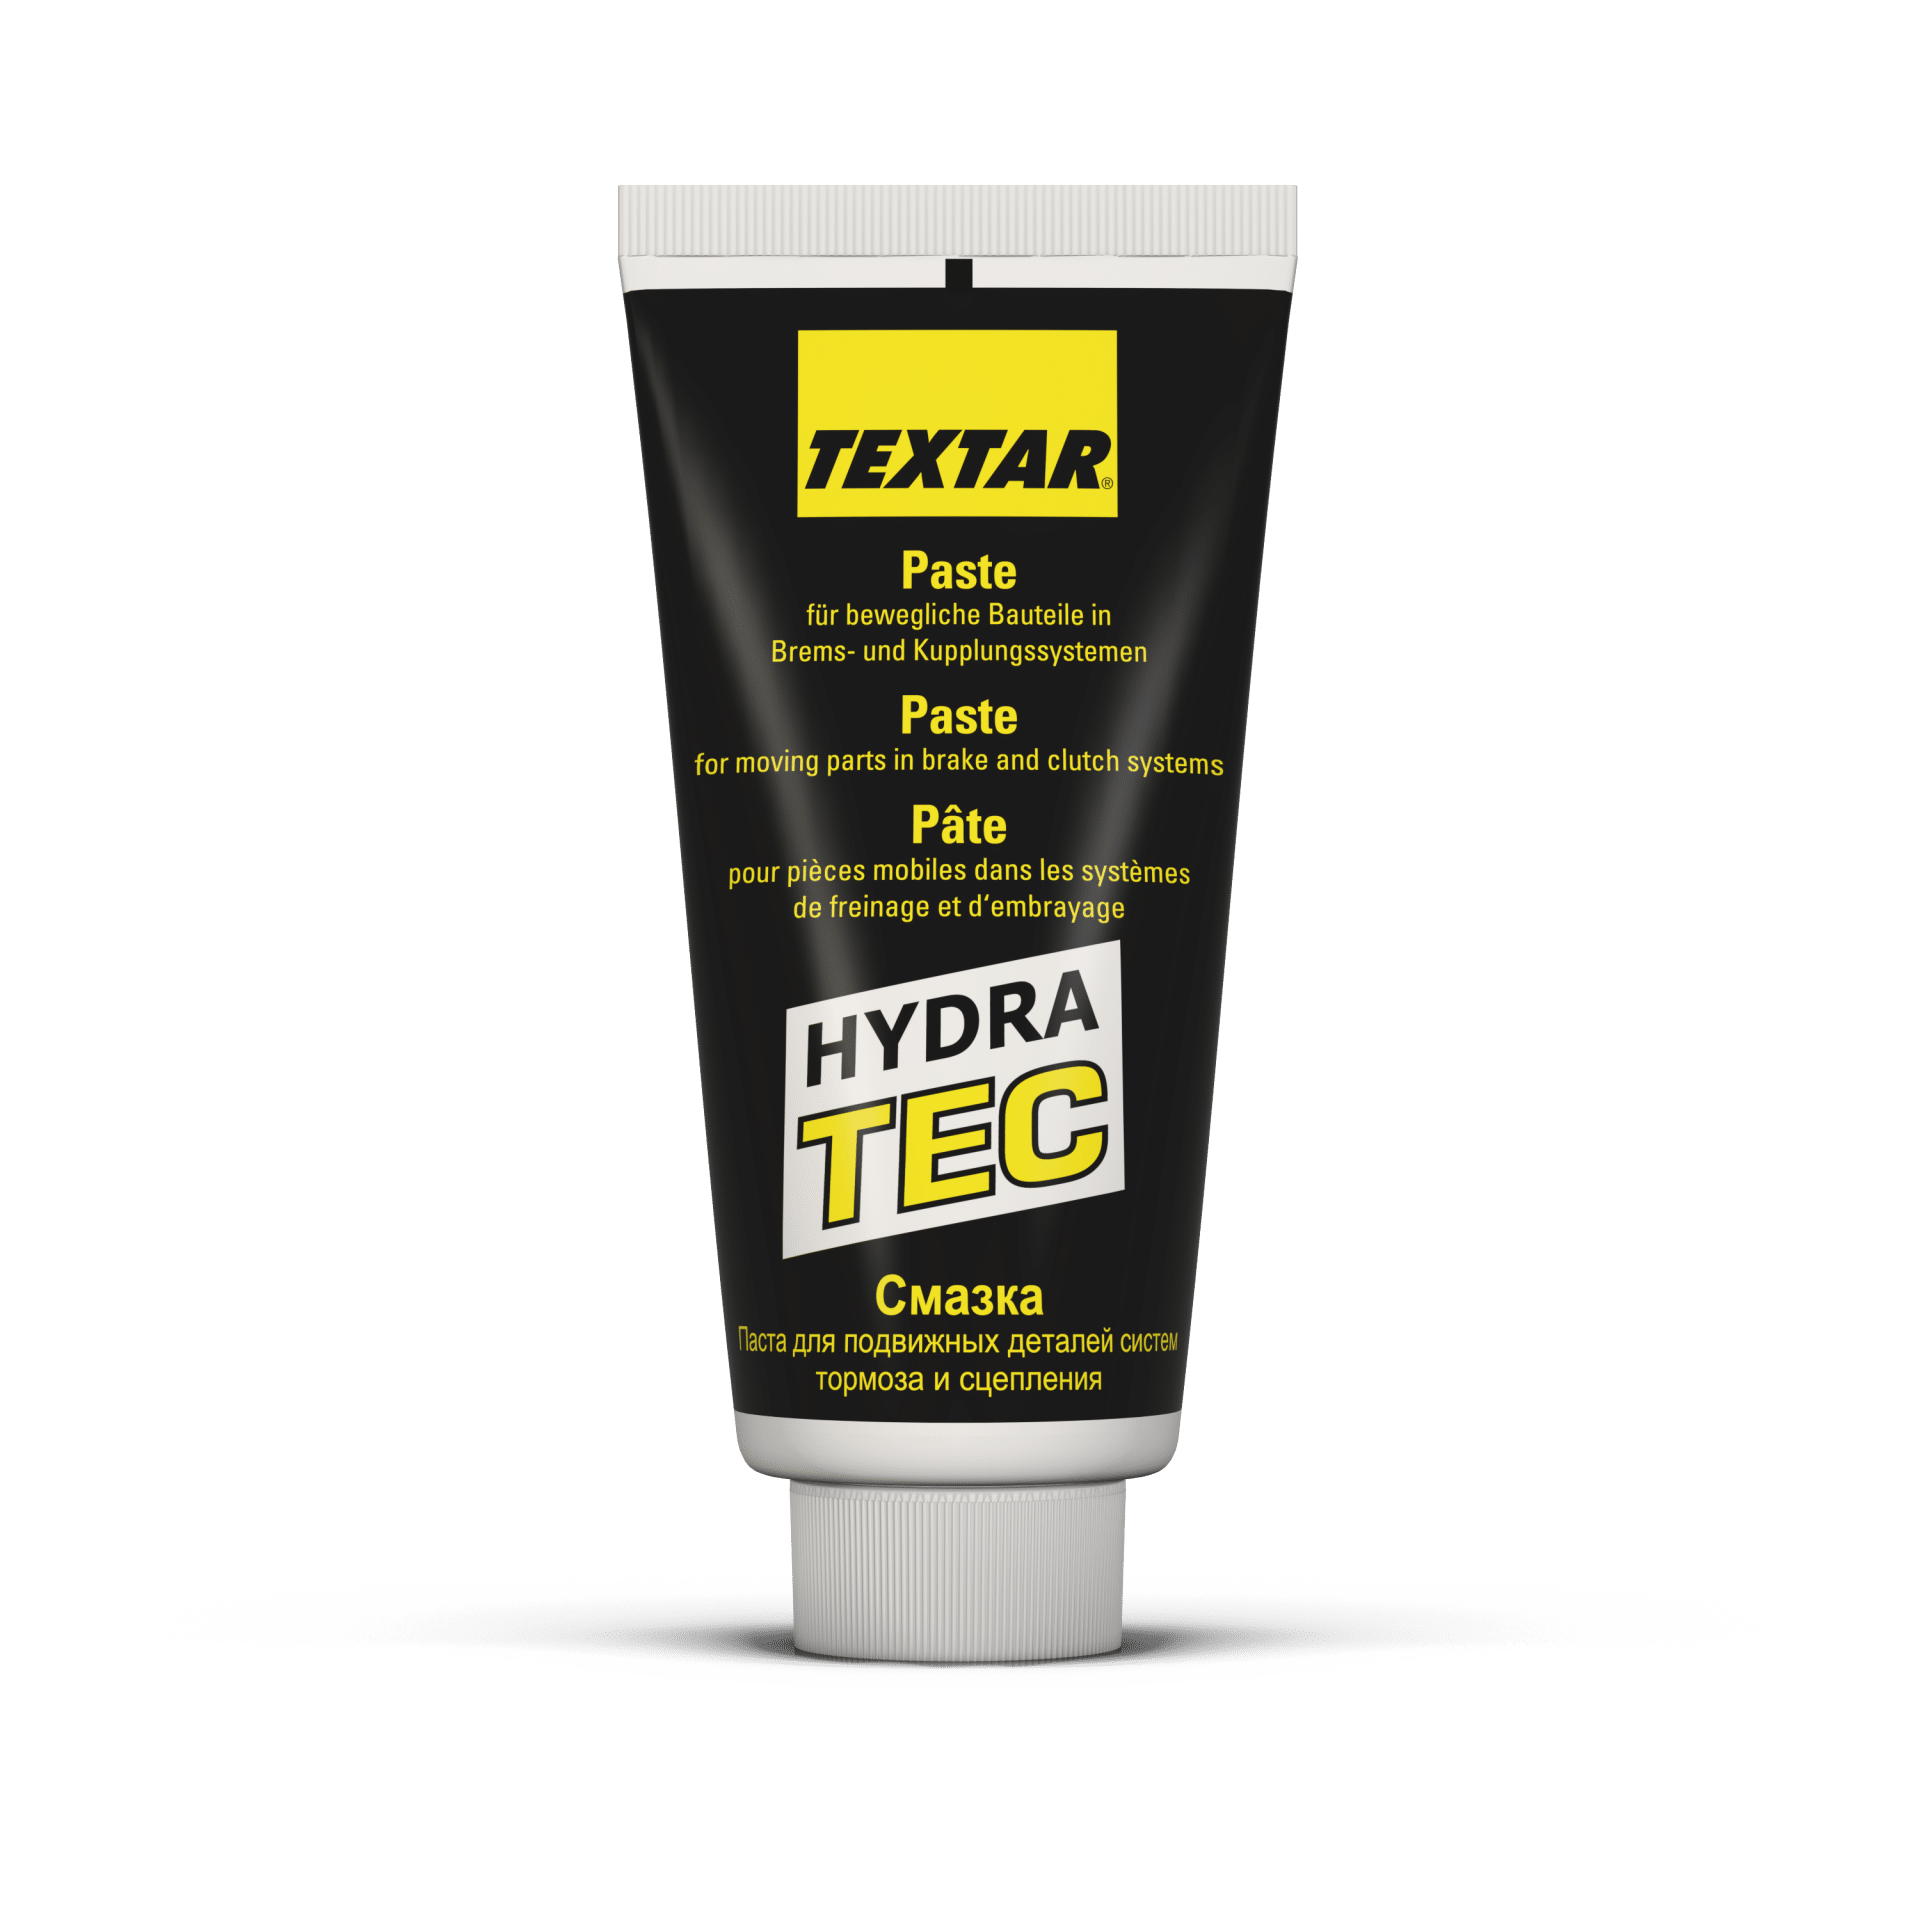 Textar Expands Range with Hydra Tec